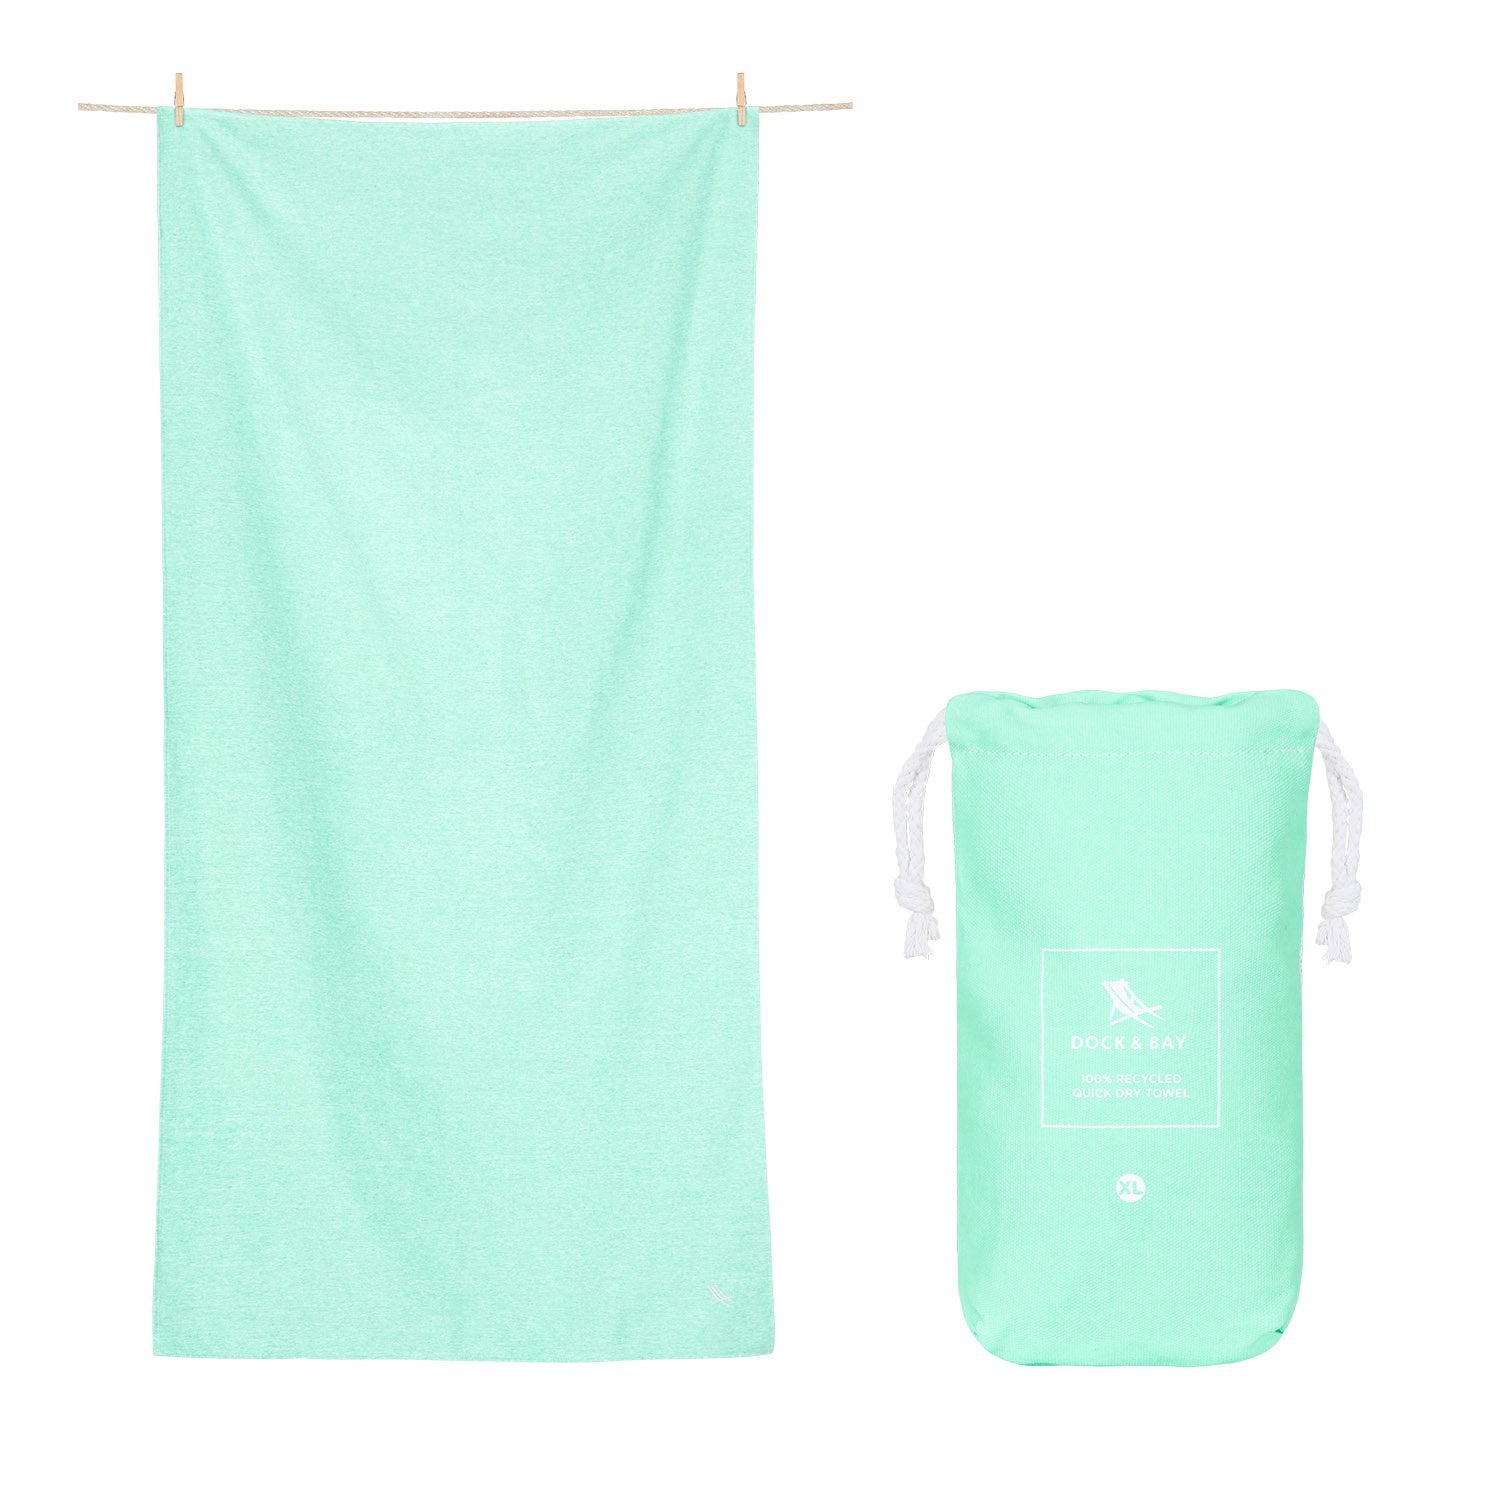 Dock & Bay Travel Towels - Essential - Rainforest Green